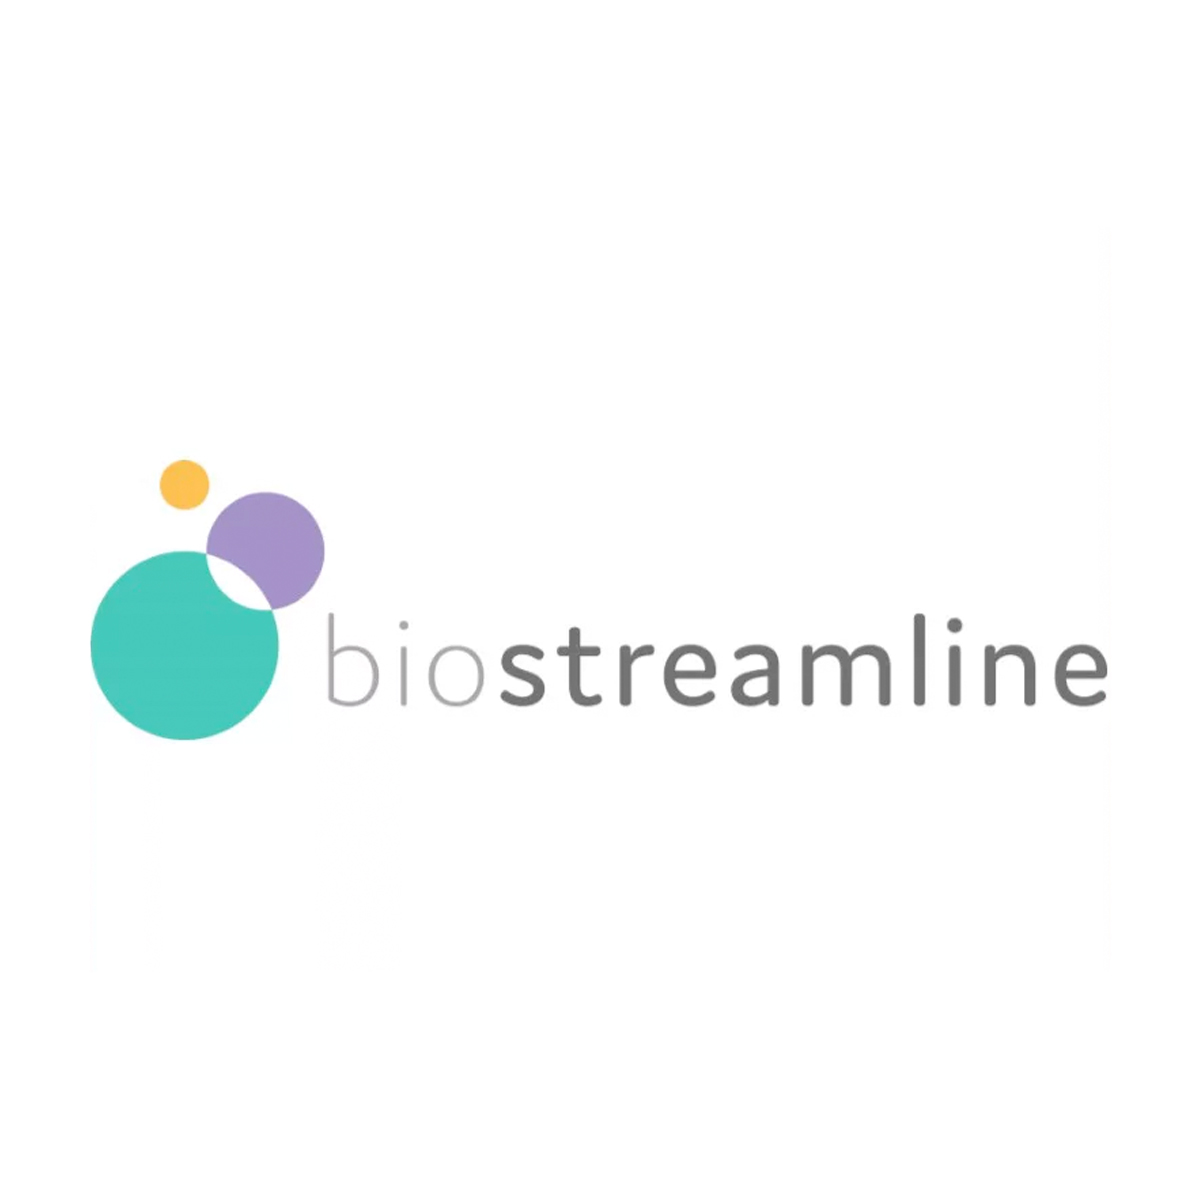 BioStreamline: Streamlining the development of next generation